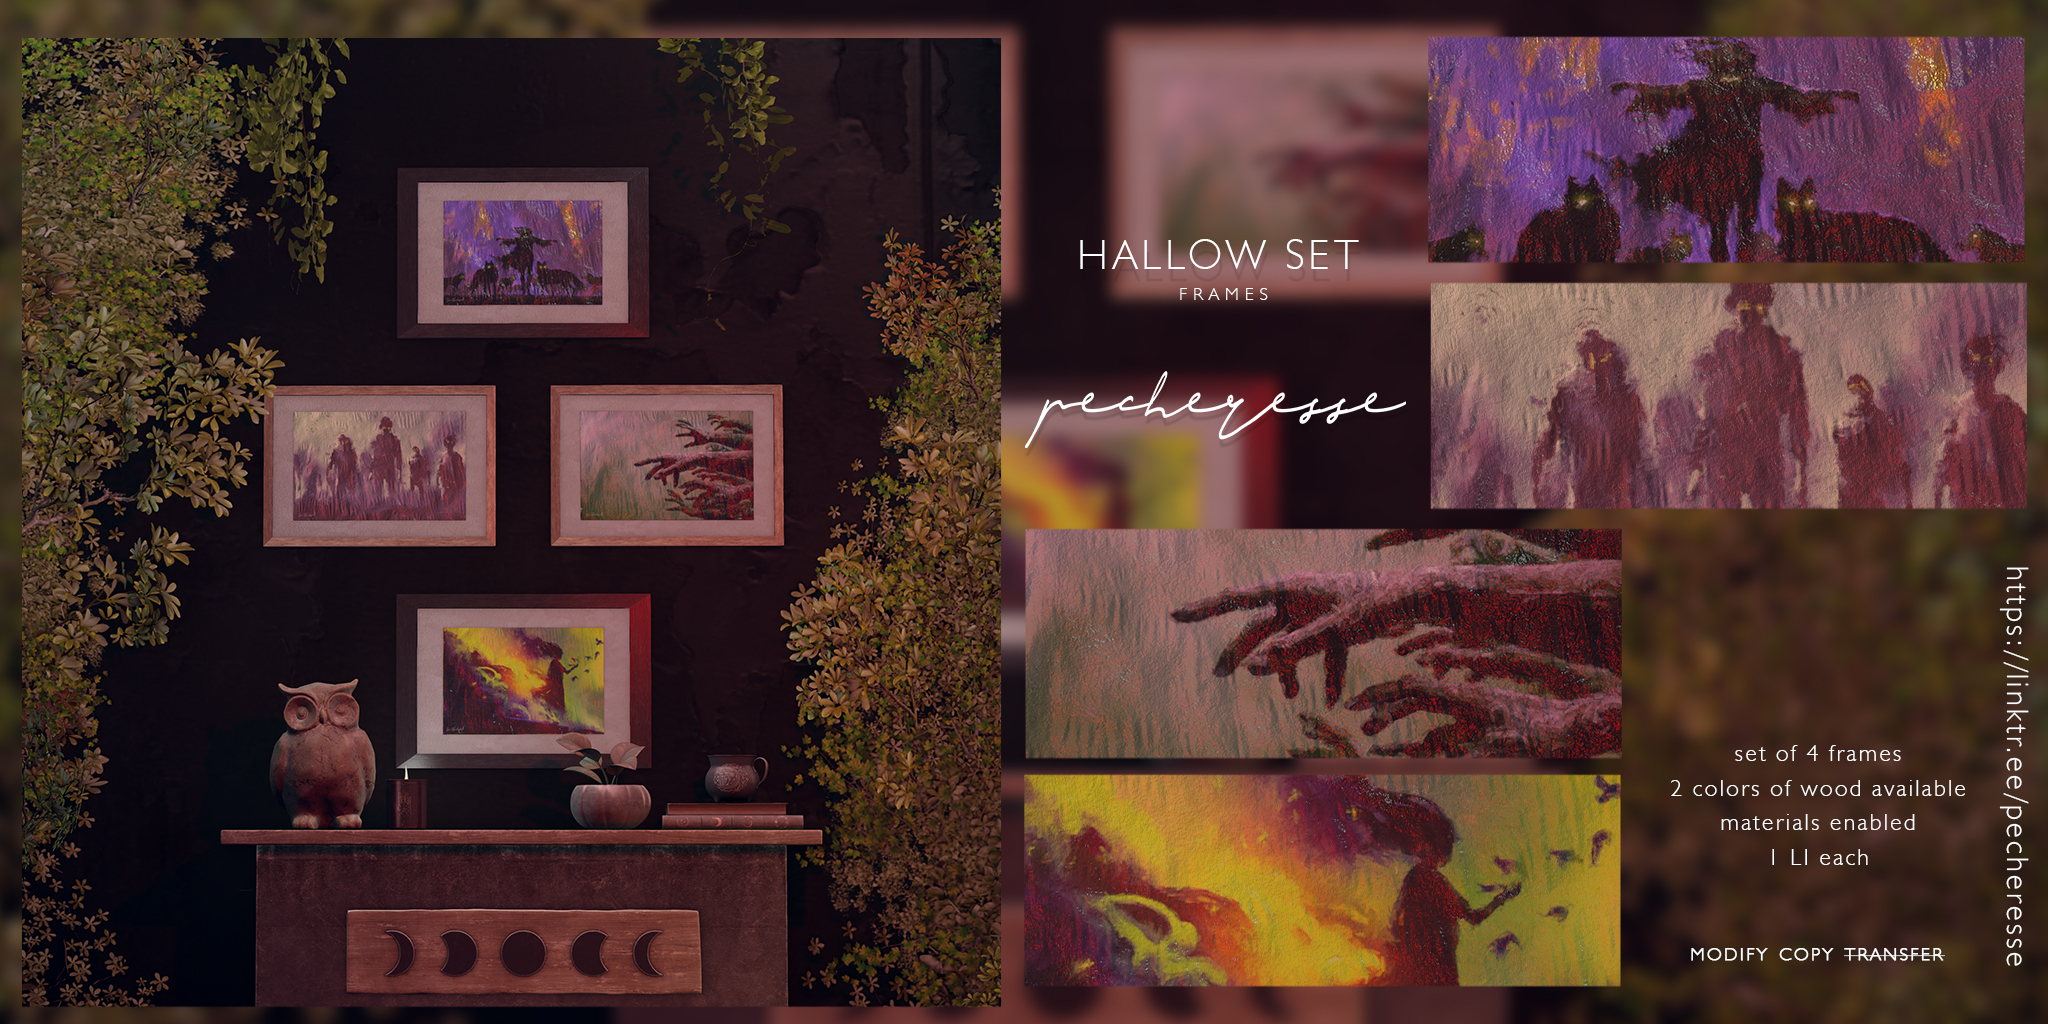 Pecheresse – Hallow Frames